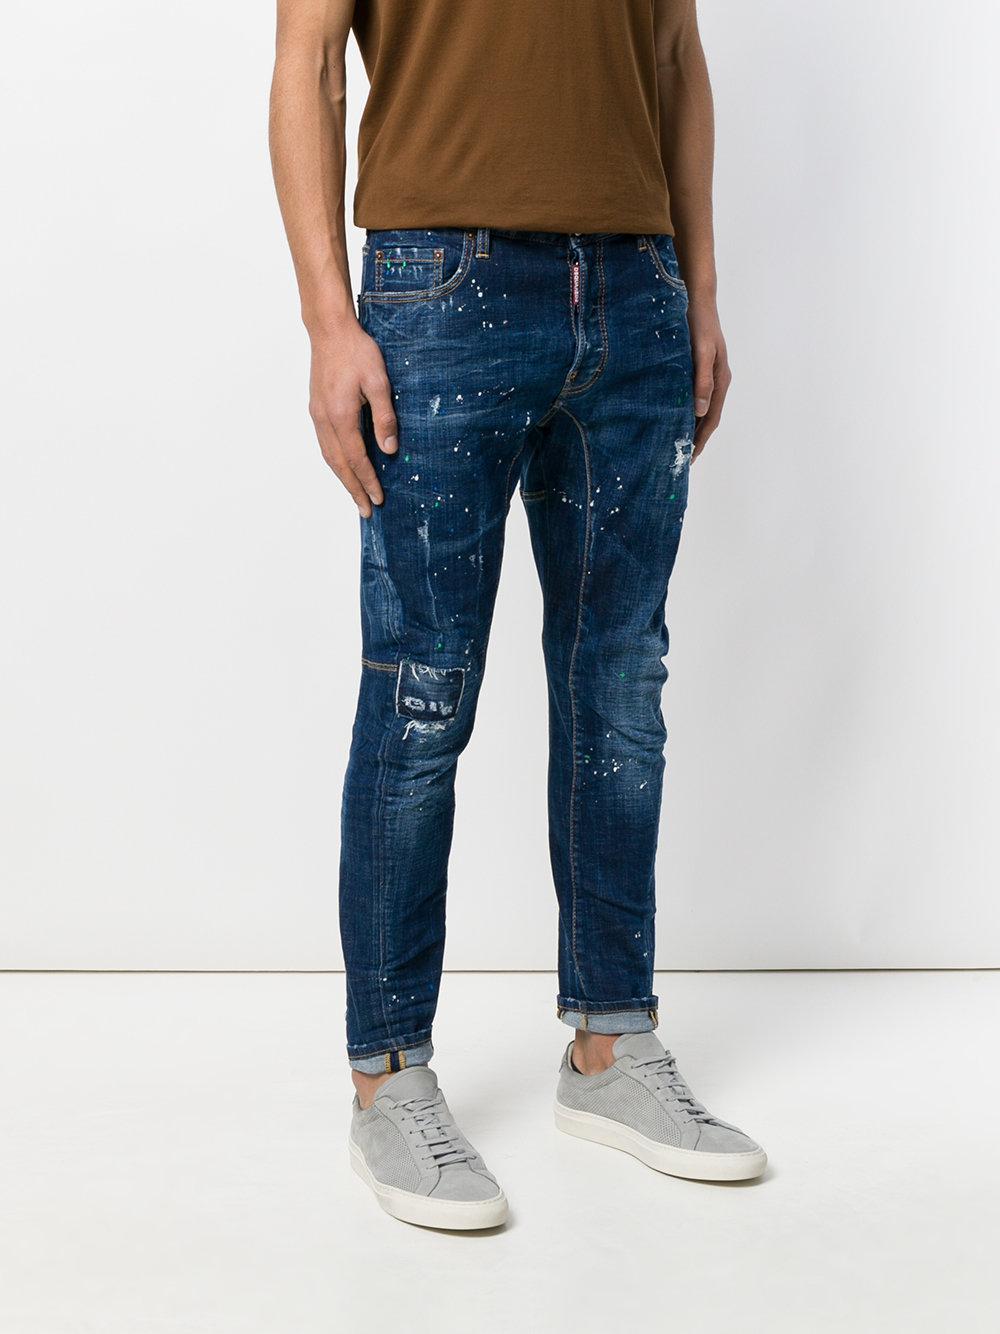 Dsquared2 Men's Jeans Slim Fit In Blue Paint Splatter Distressed Jeans 